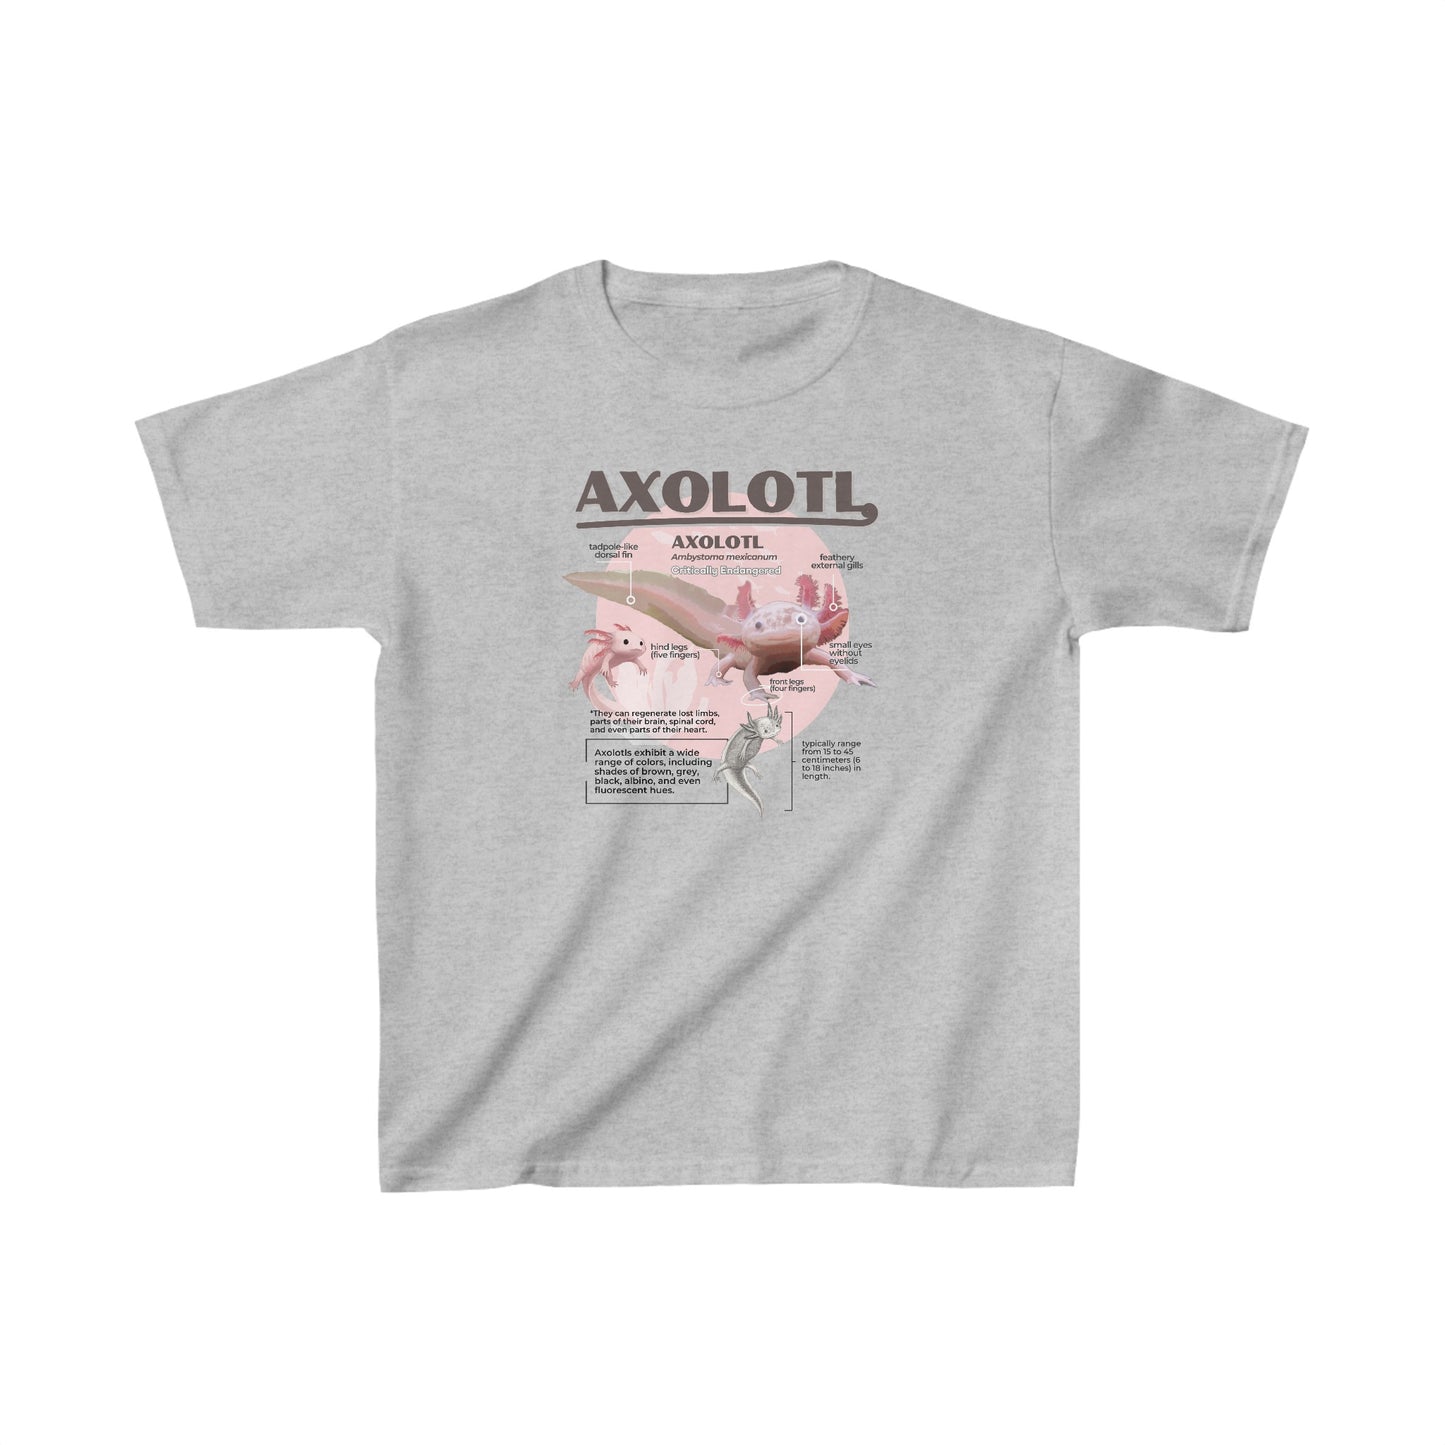 Axolotl Tshirt